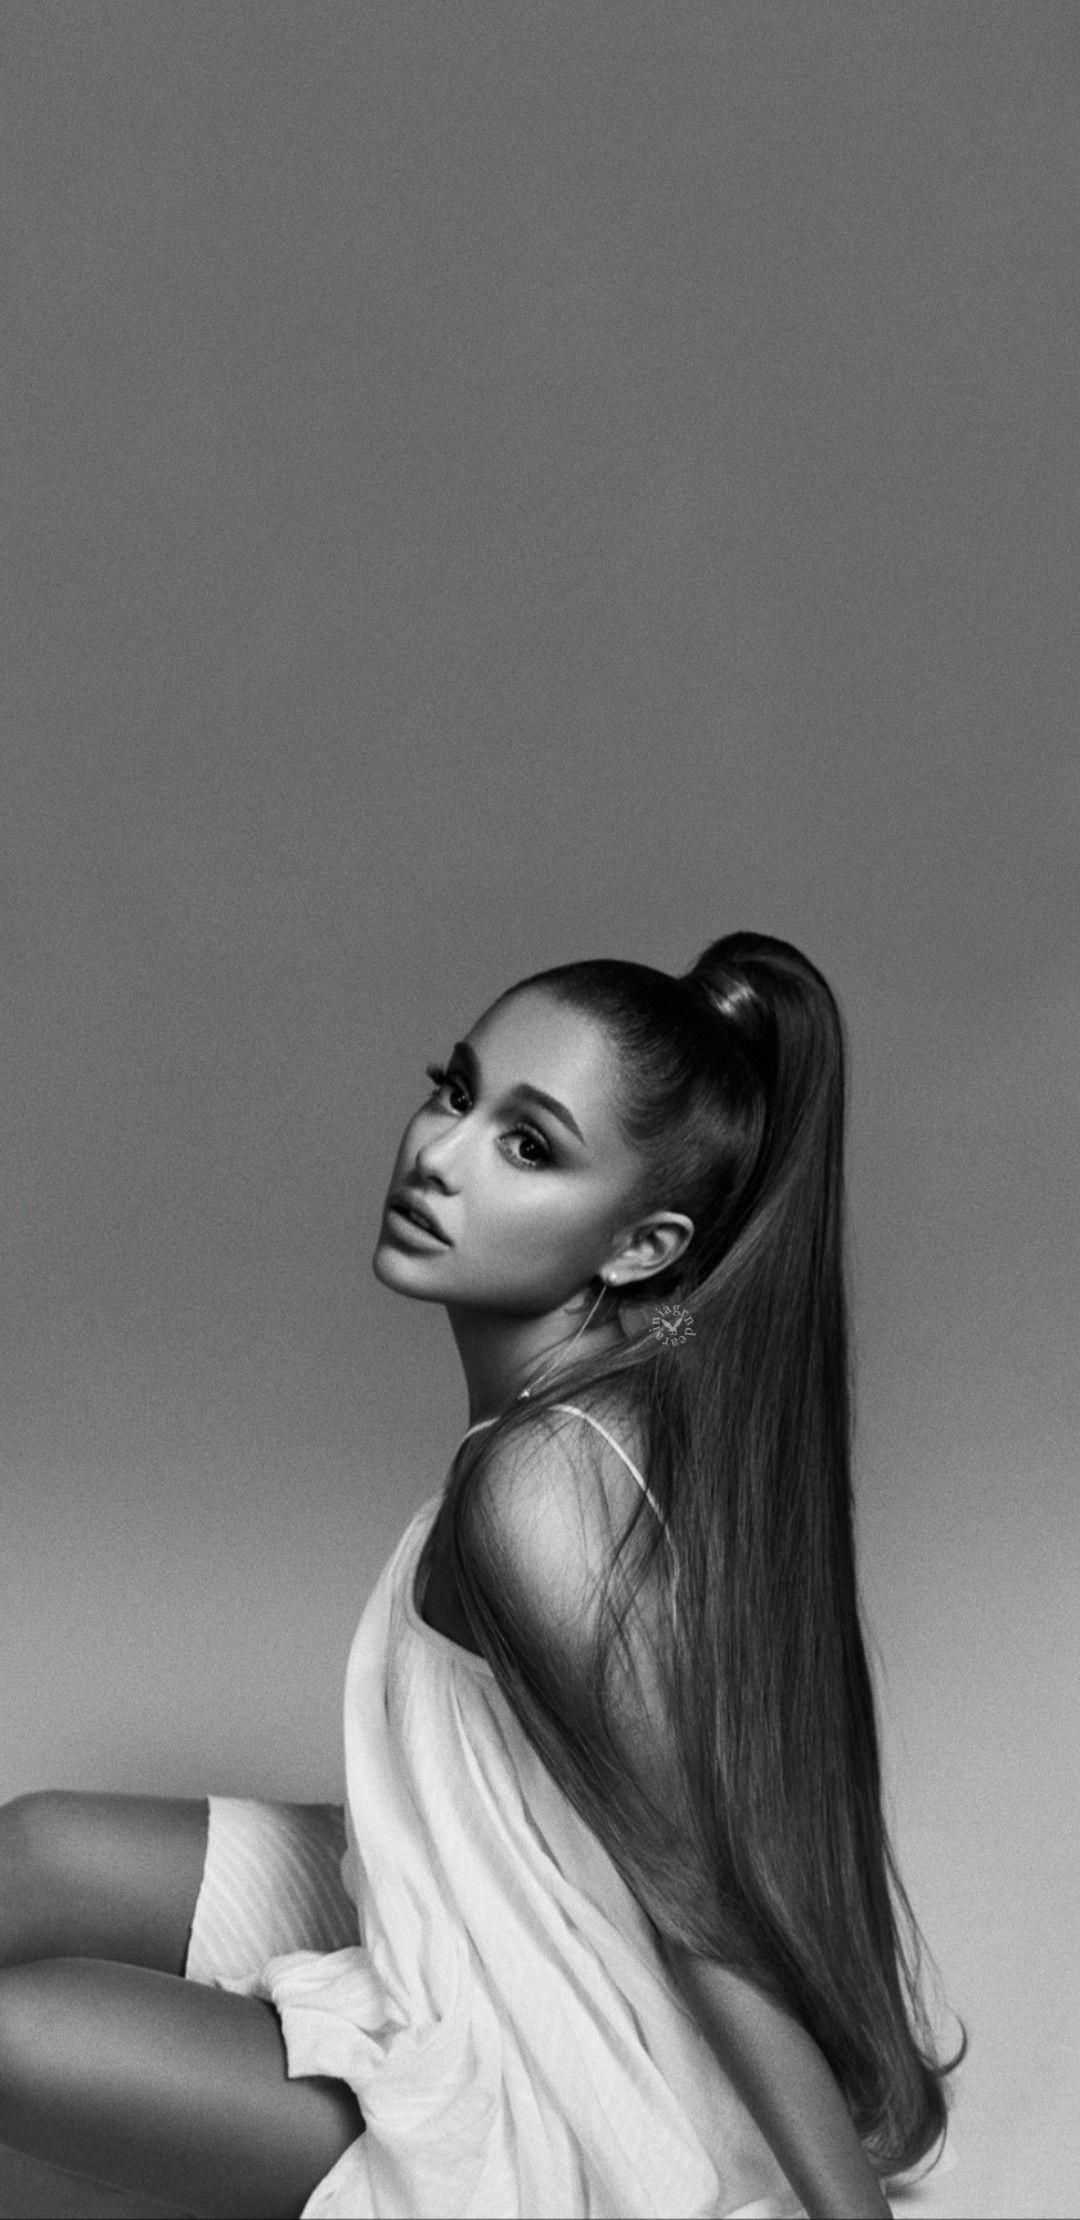 Ariana Grande 4K UHD 2021 Wallpapers